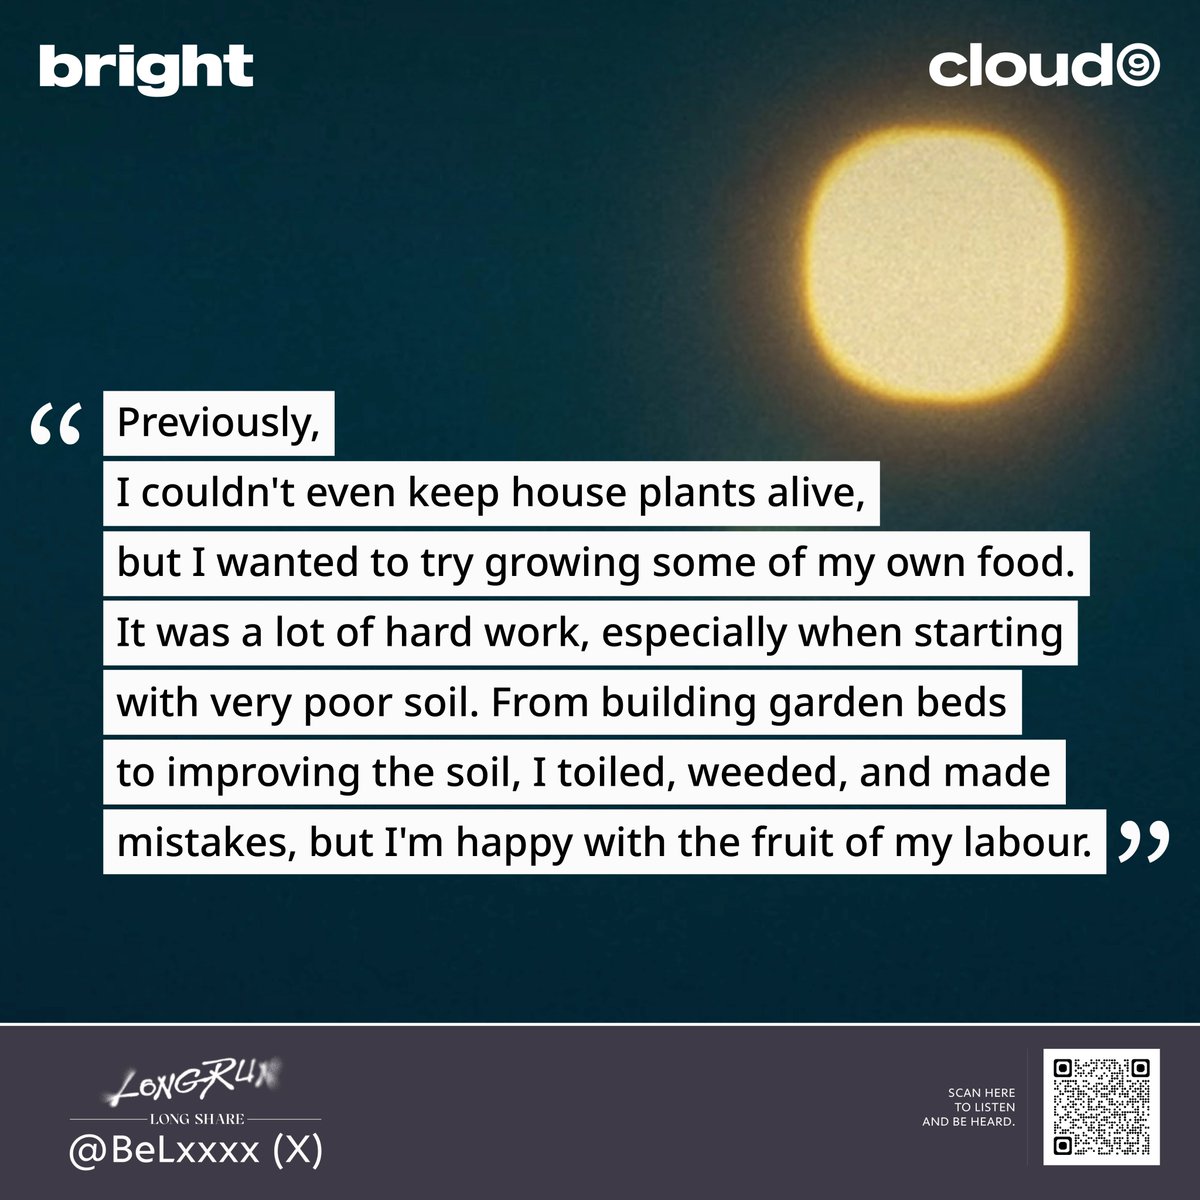 'THE FRUIT OF MY LABOUR.'

#LongRunLongShare
#BRIGHT_LongRun
 
•••
 
WATCH OFFICIAL MV & LISTEN ON...
🔗 youtu.be/OdSqh9Dd-oY
🔗 bfan.link/long-run
 
#LongRunMV
#LongRun
#bbrightvc
#Cloud9Ent